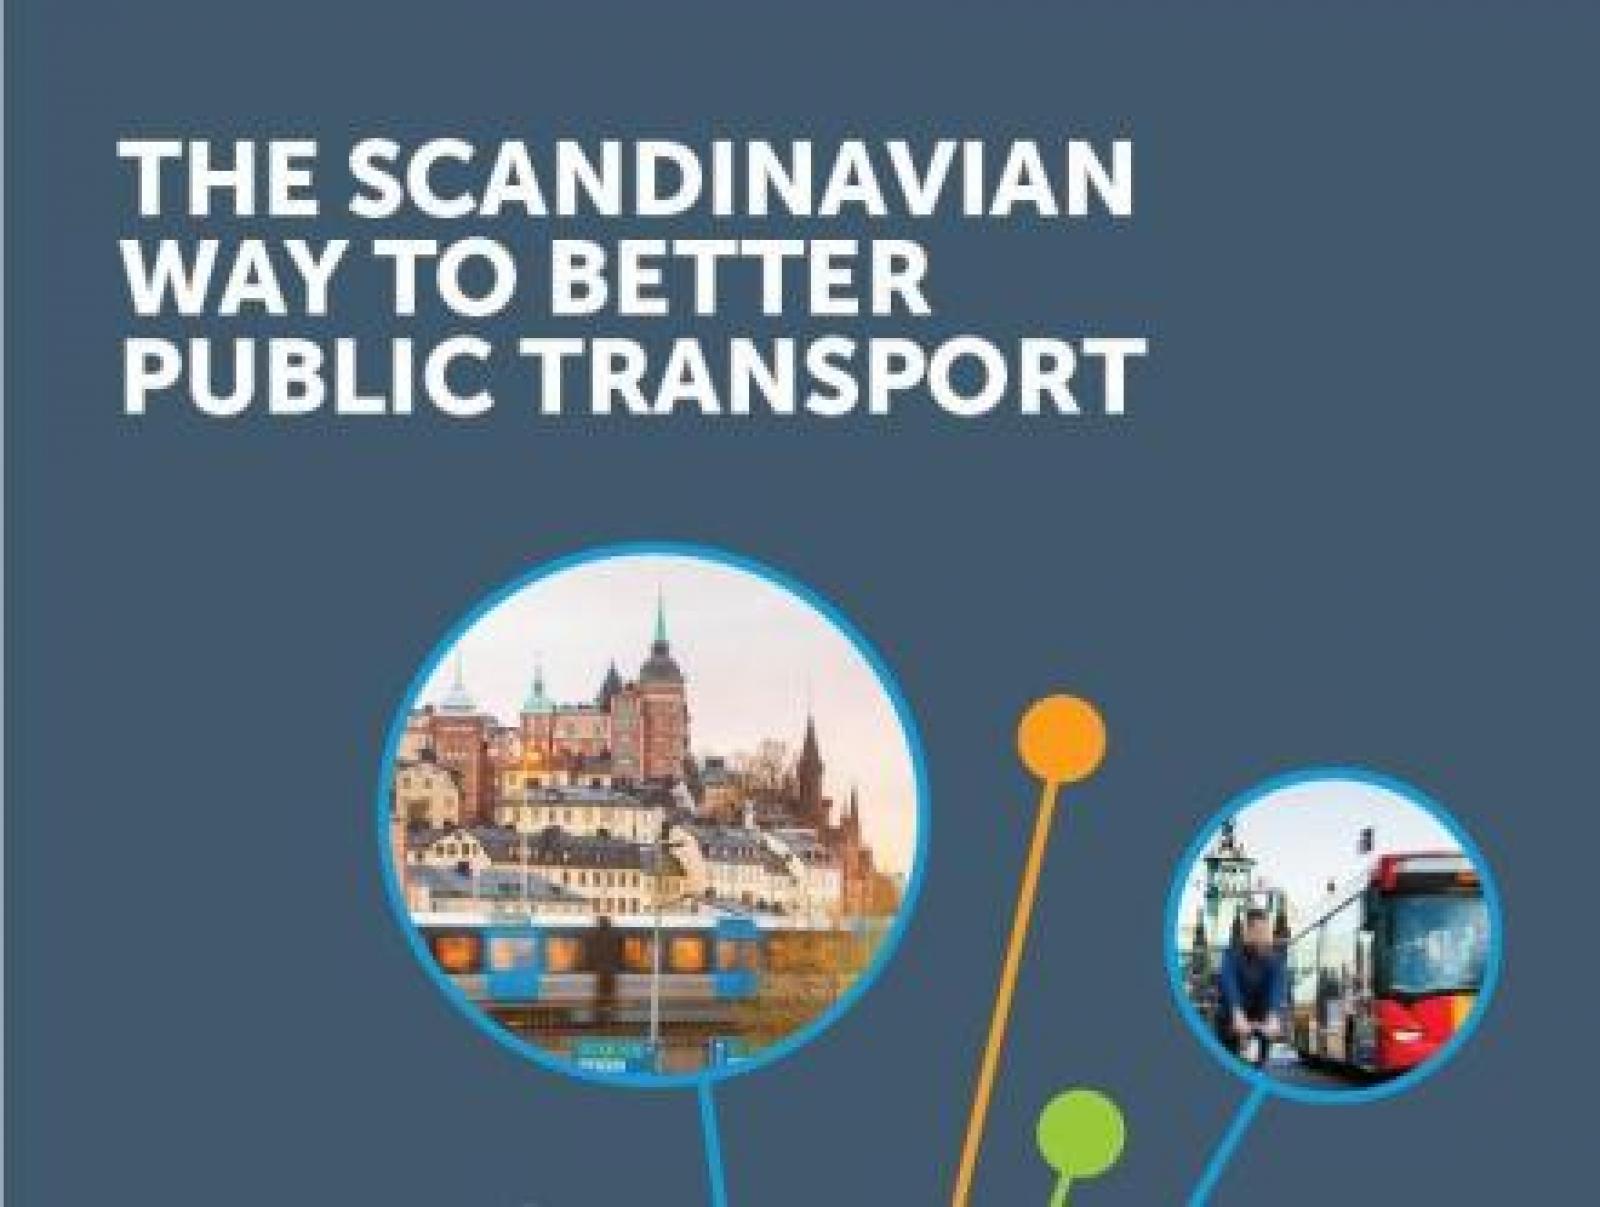 The Scandinavian way to better public transport